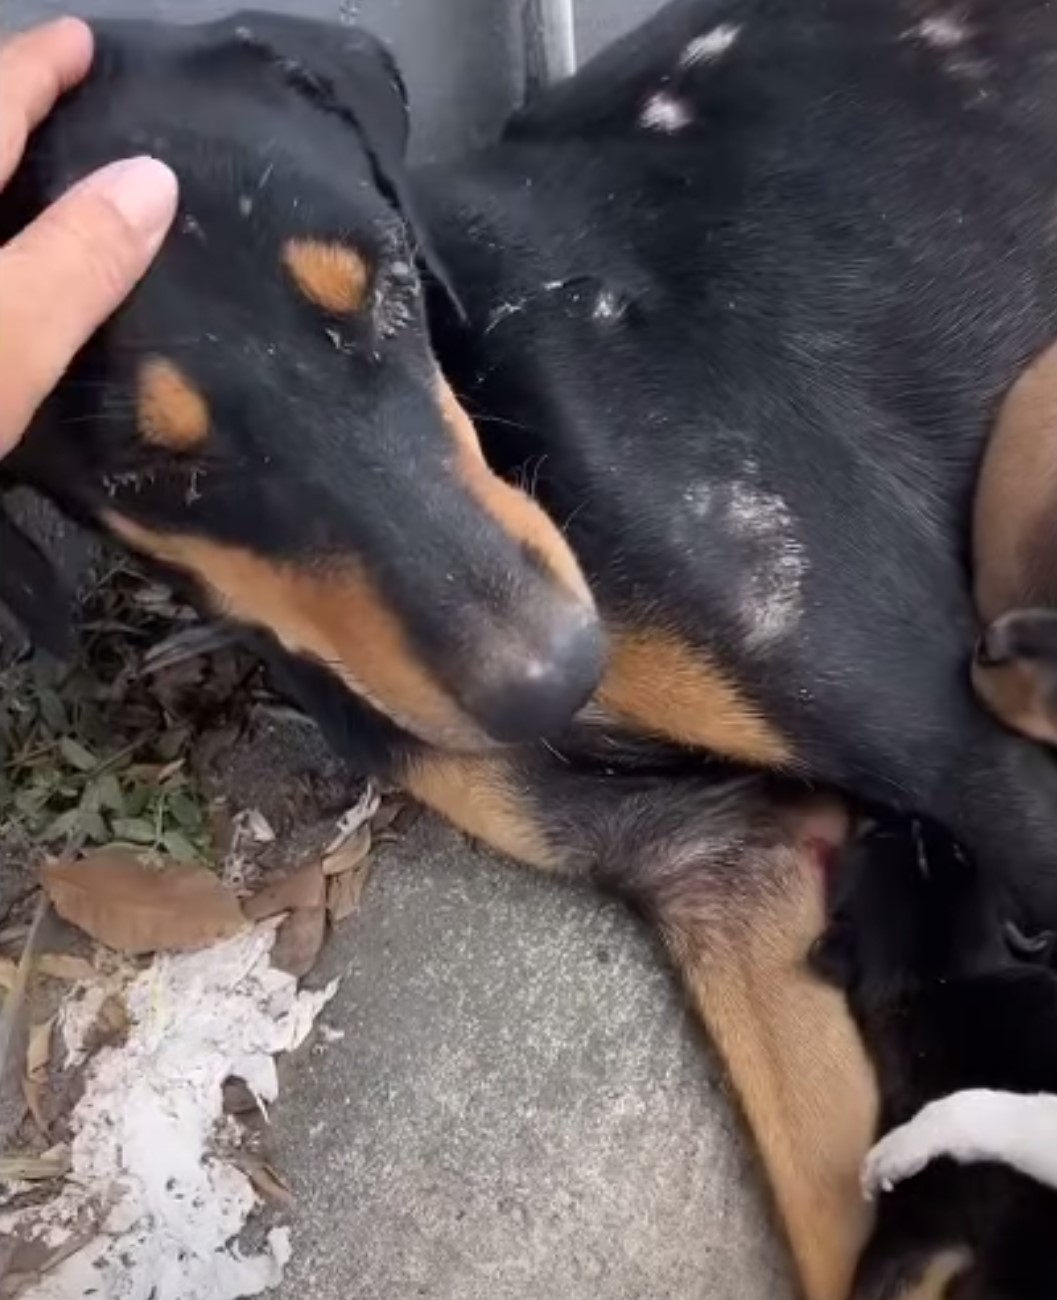 hand petting the injured dog